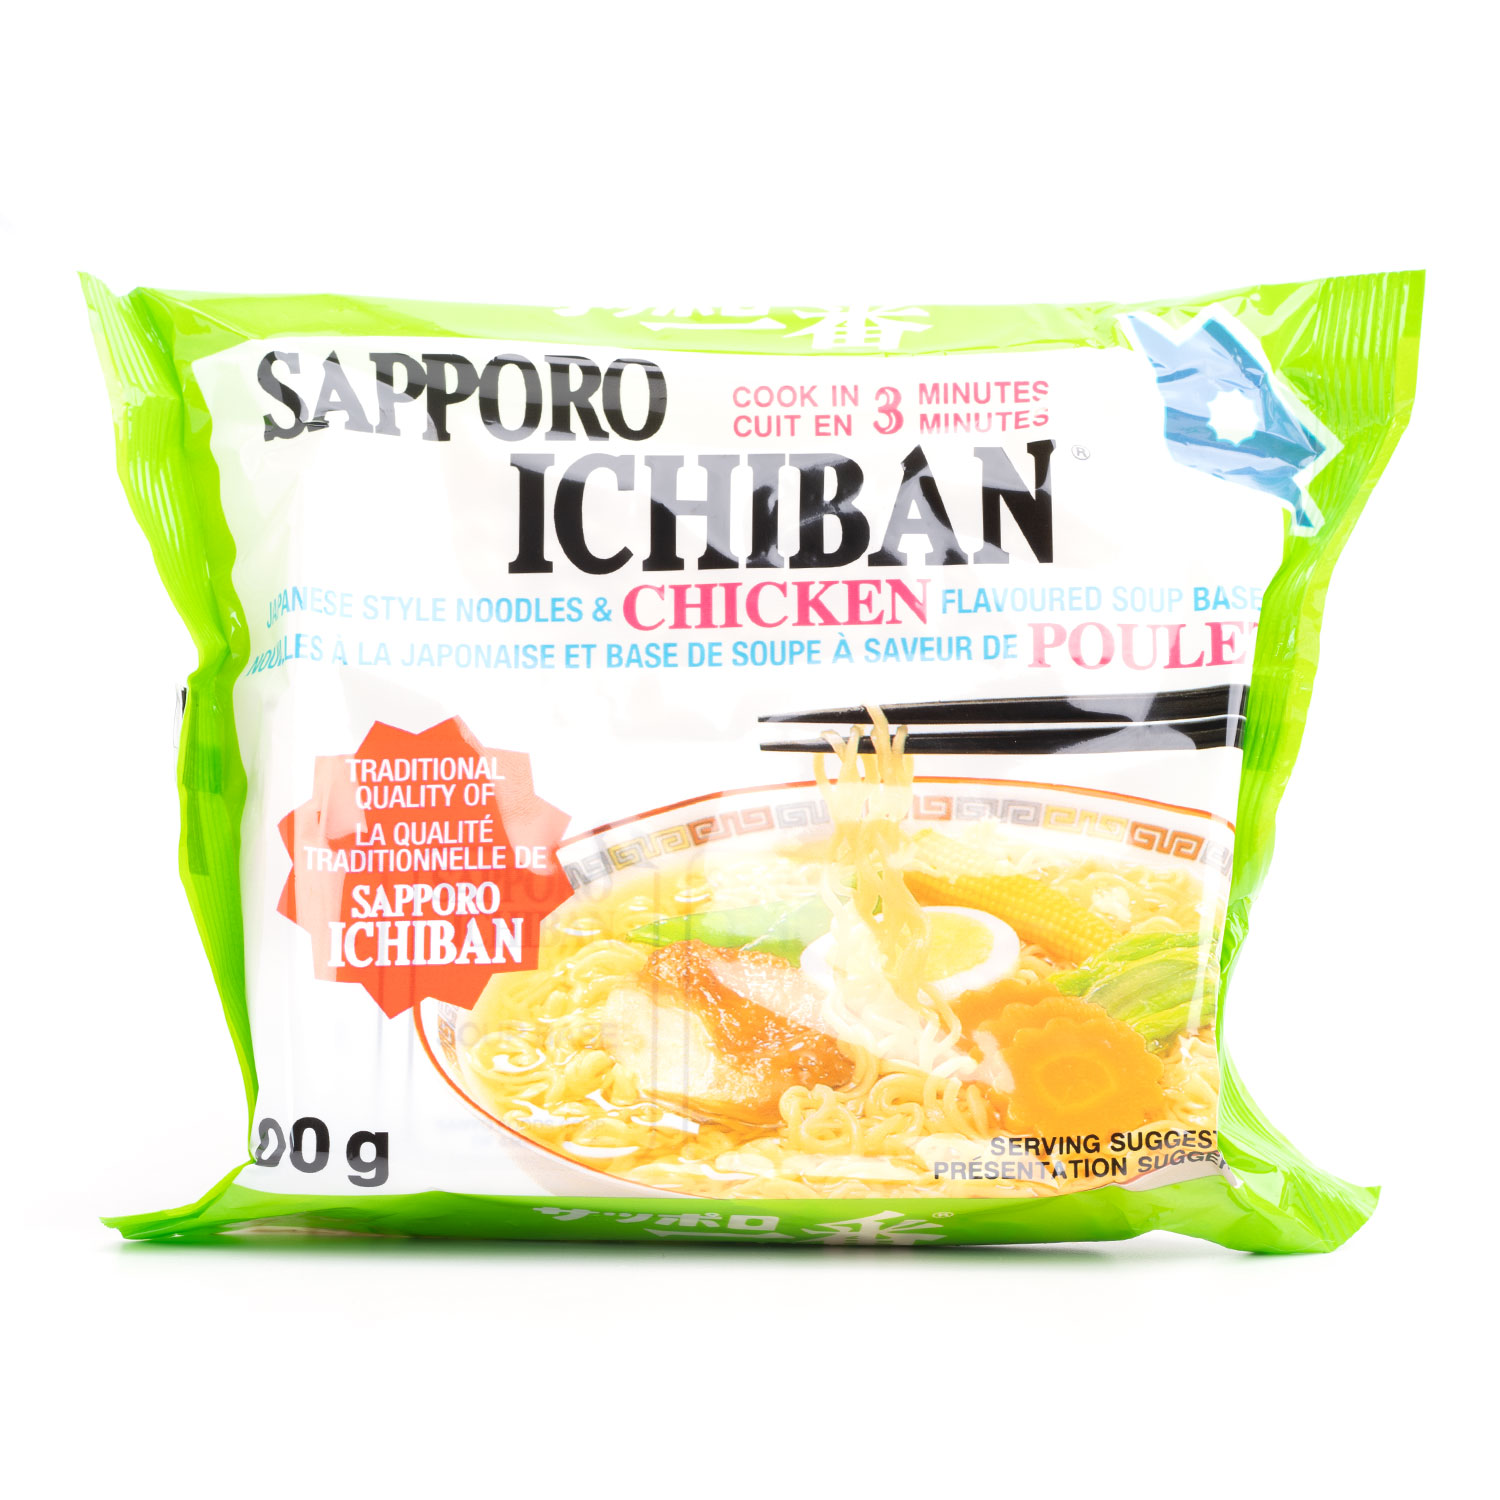 Sapporo Ichiban Noodles